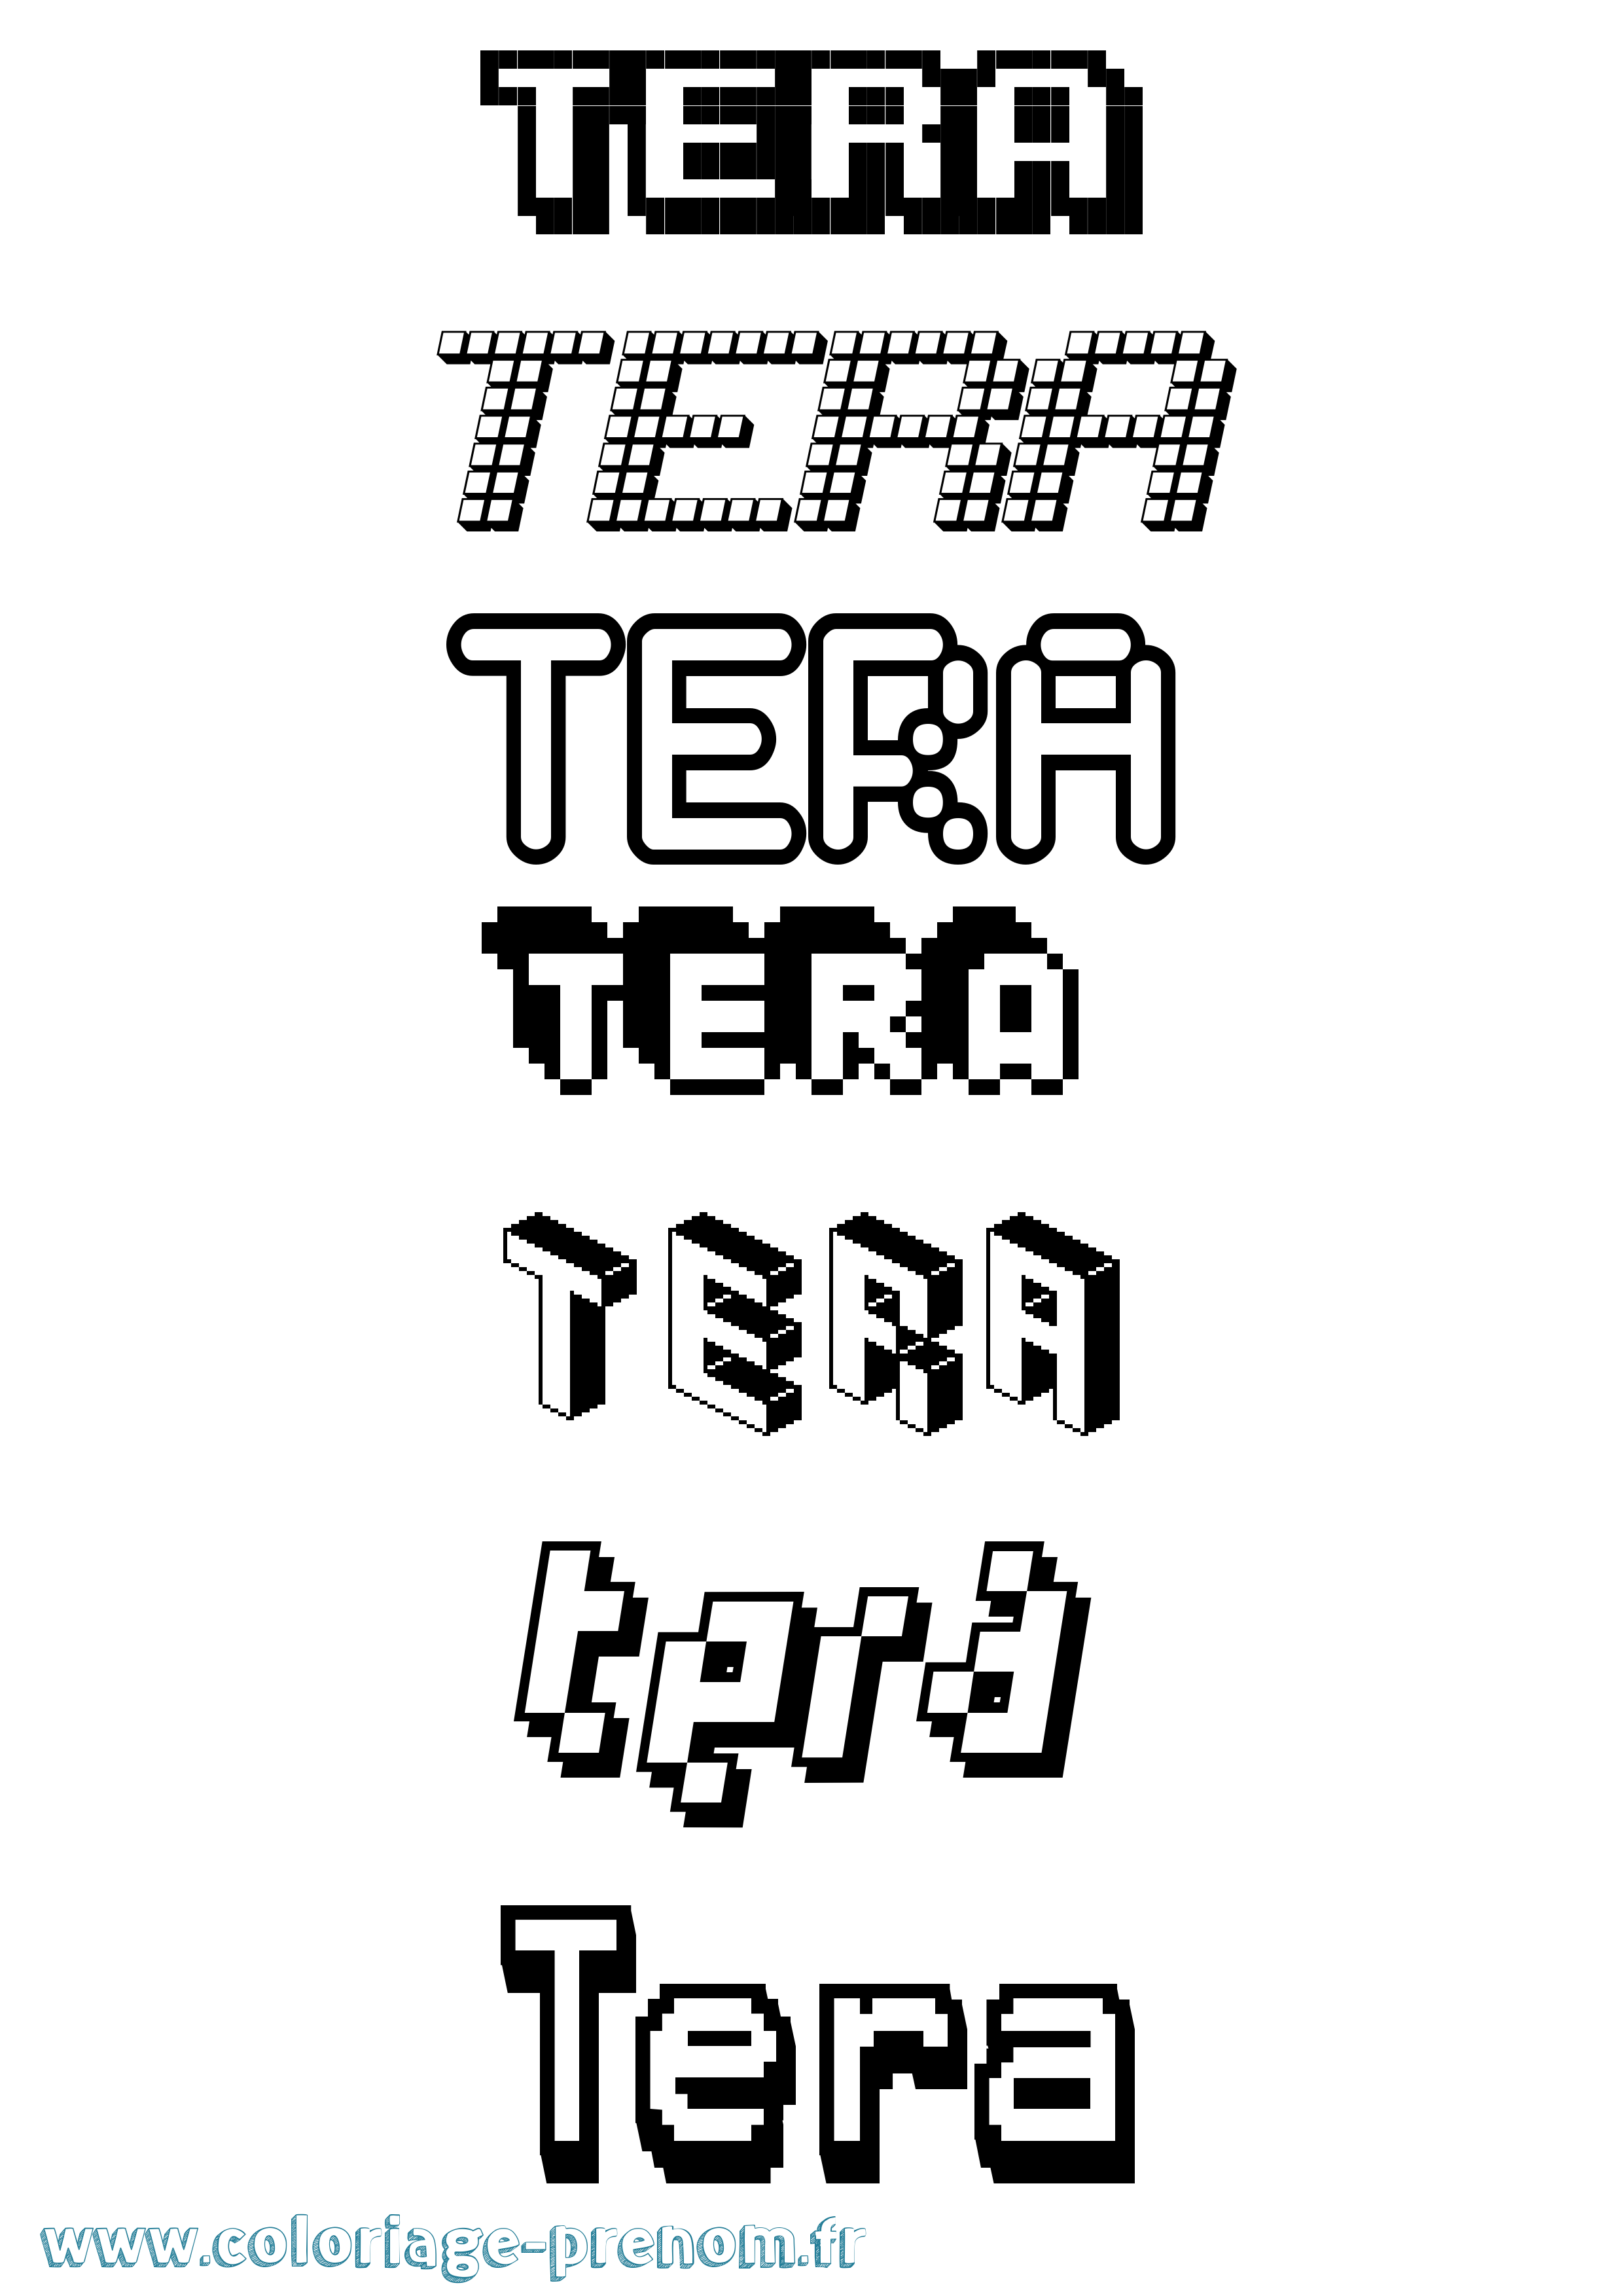 Coloriage prénom Tera Pixel